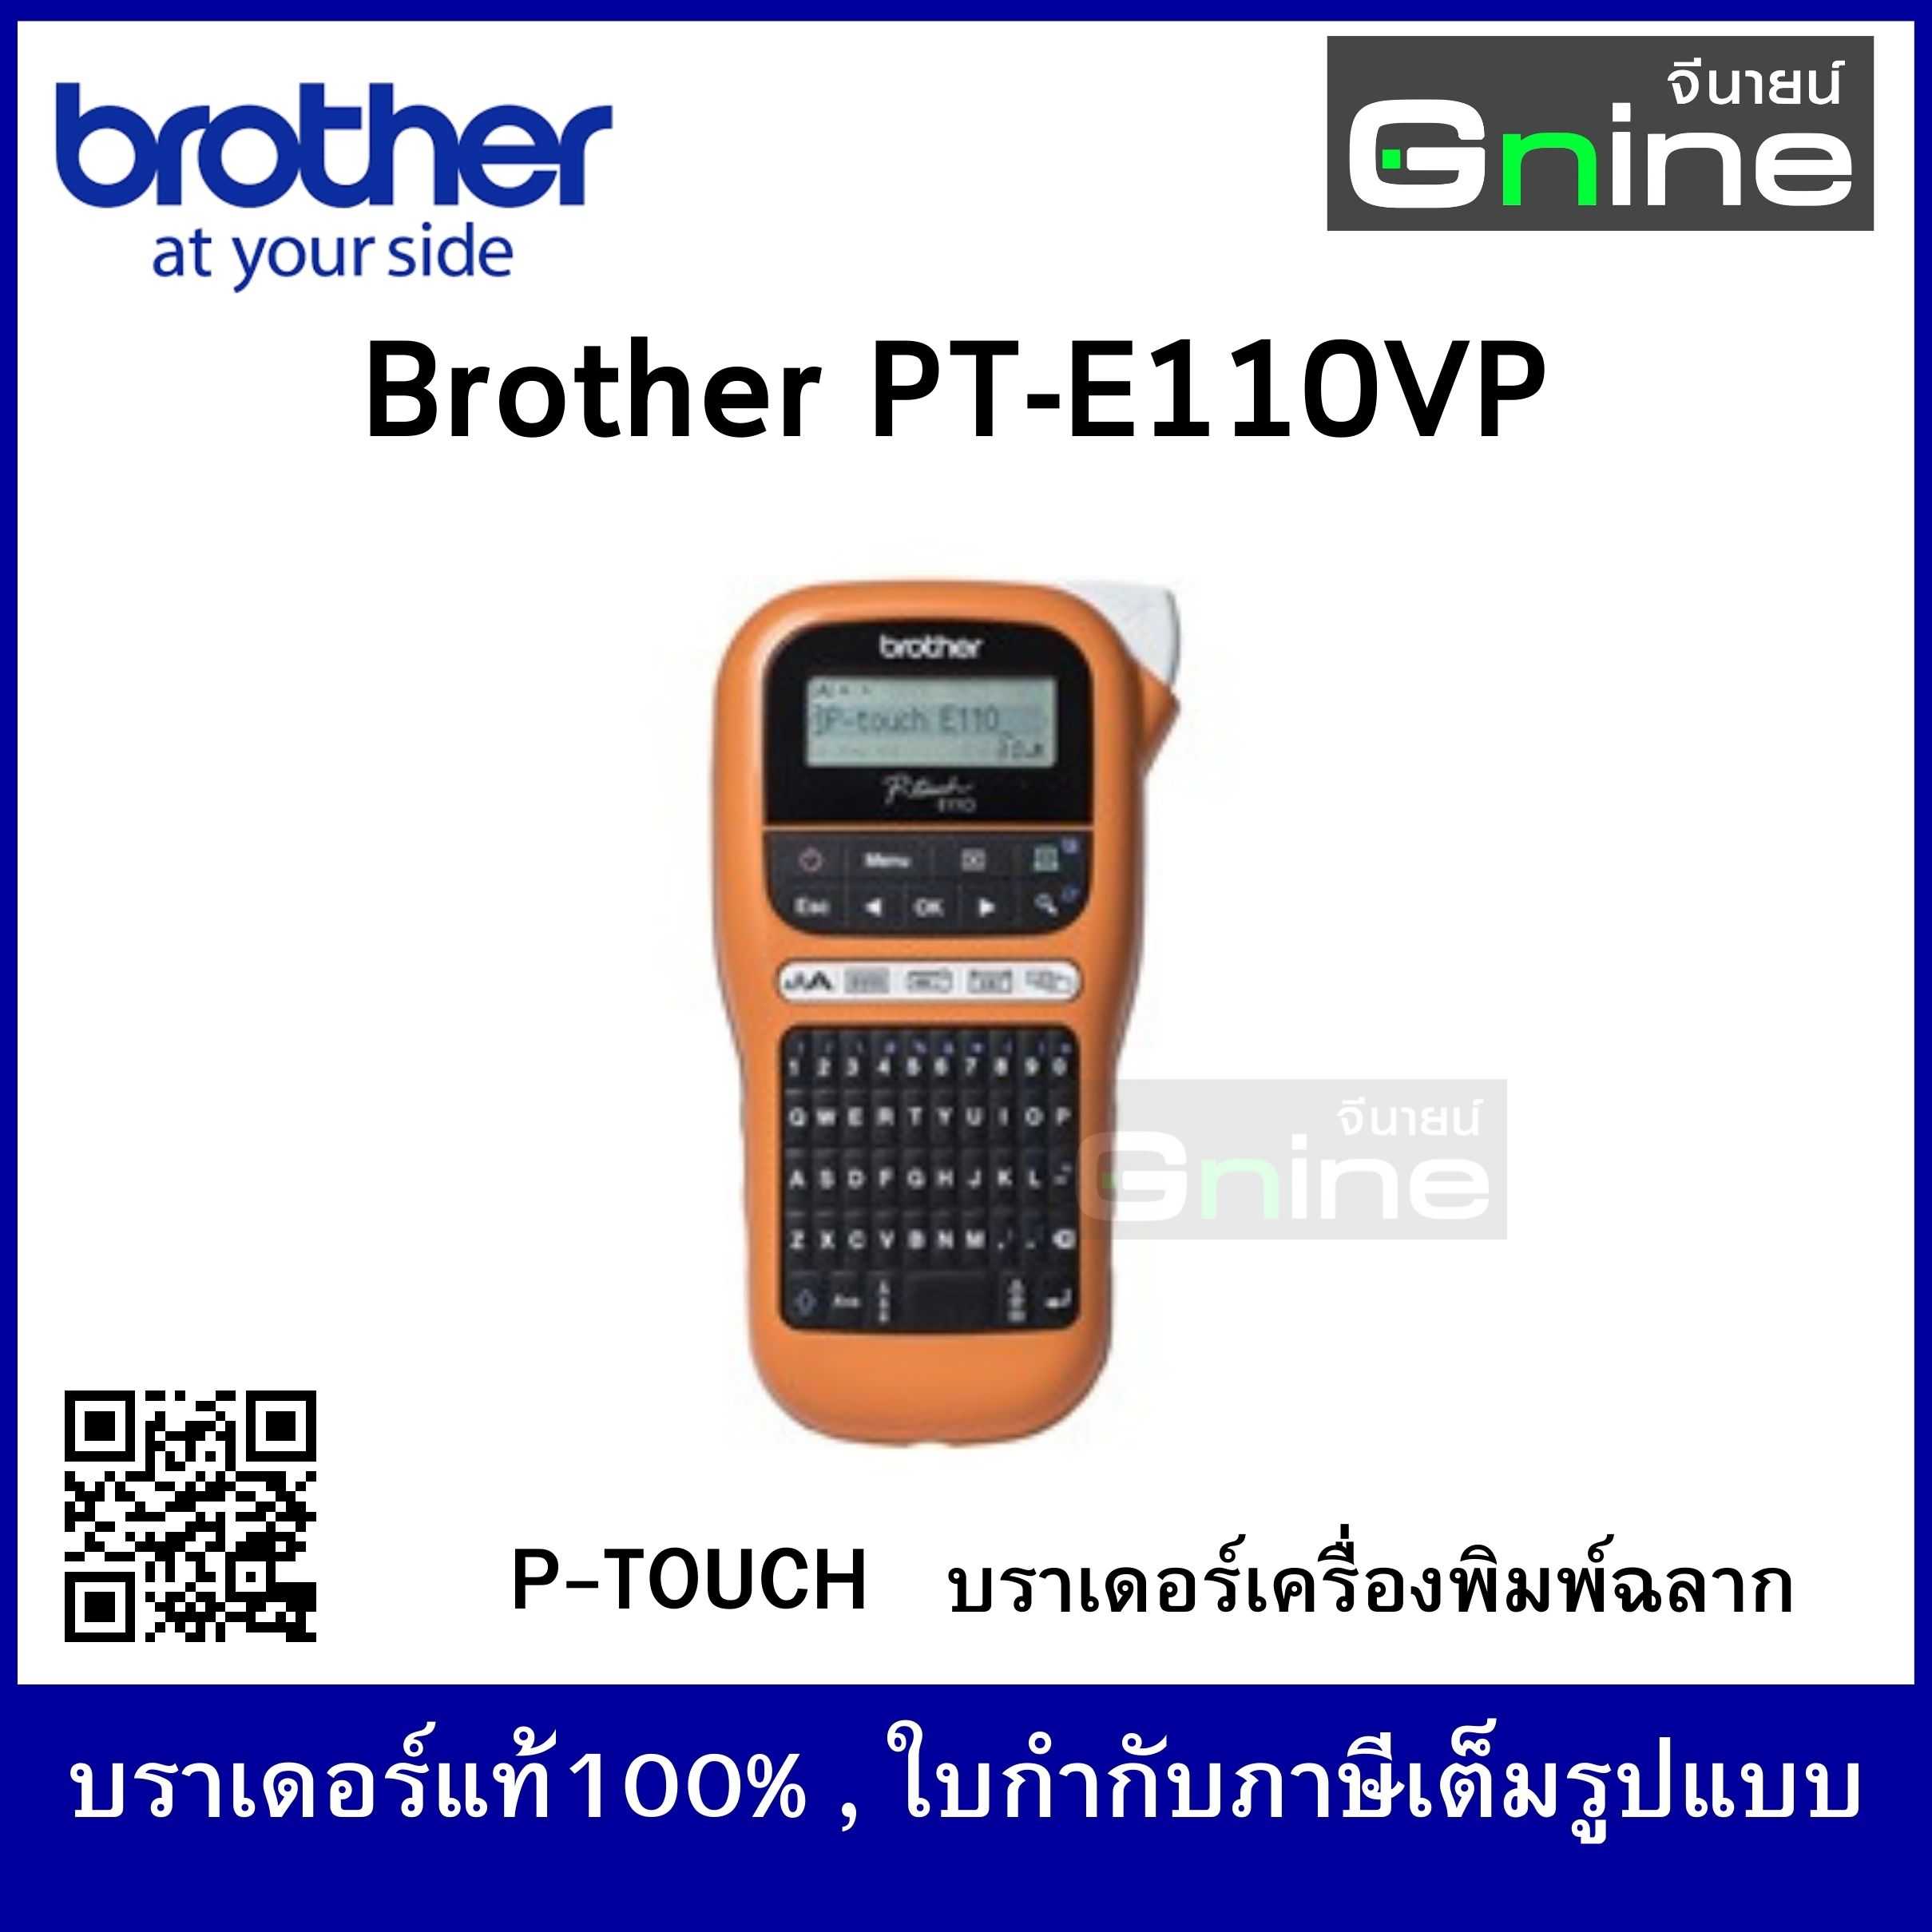 Brother P-Touch รุ่นPT-E110VP (เครื่องพิมพ์ฉลาก บราเดอร์)